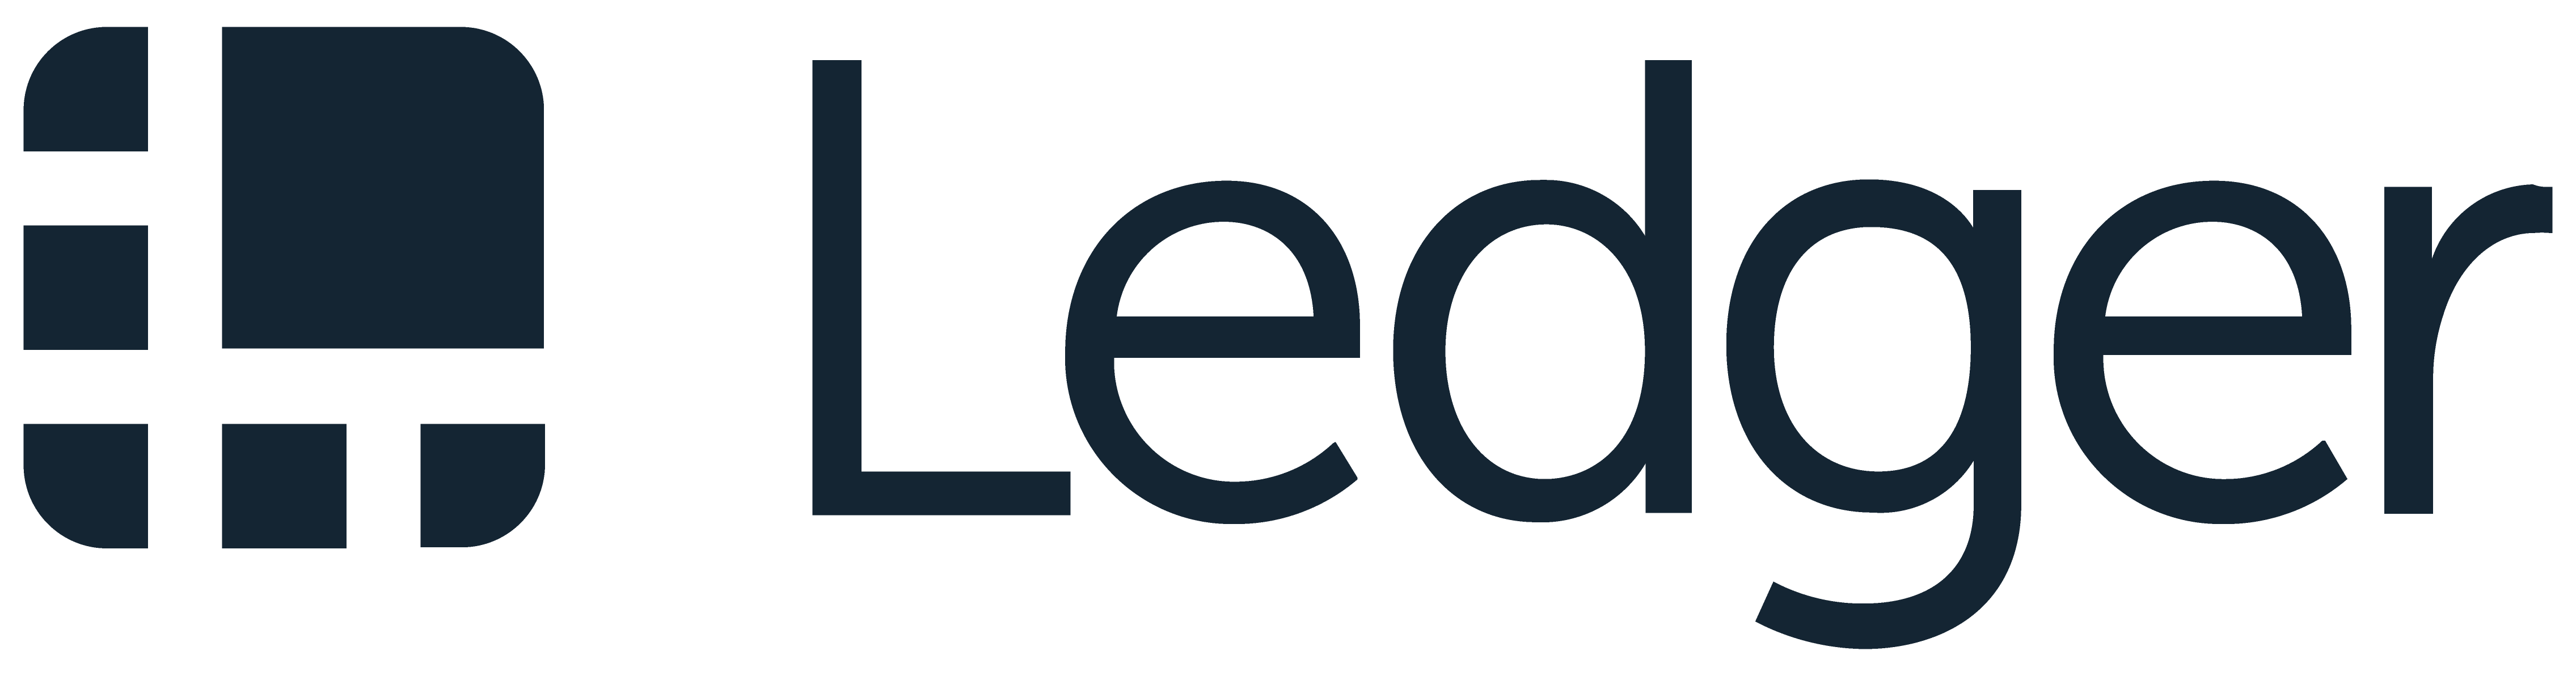 Ledger logo colors